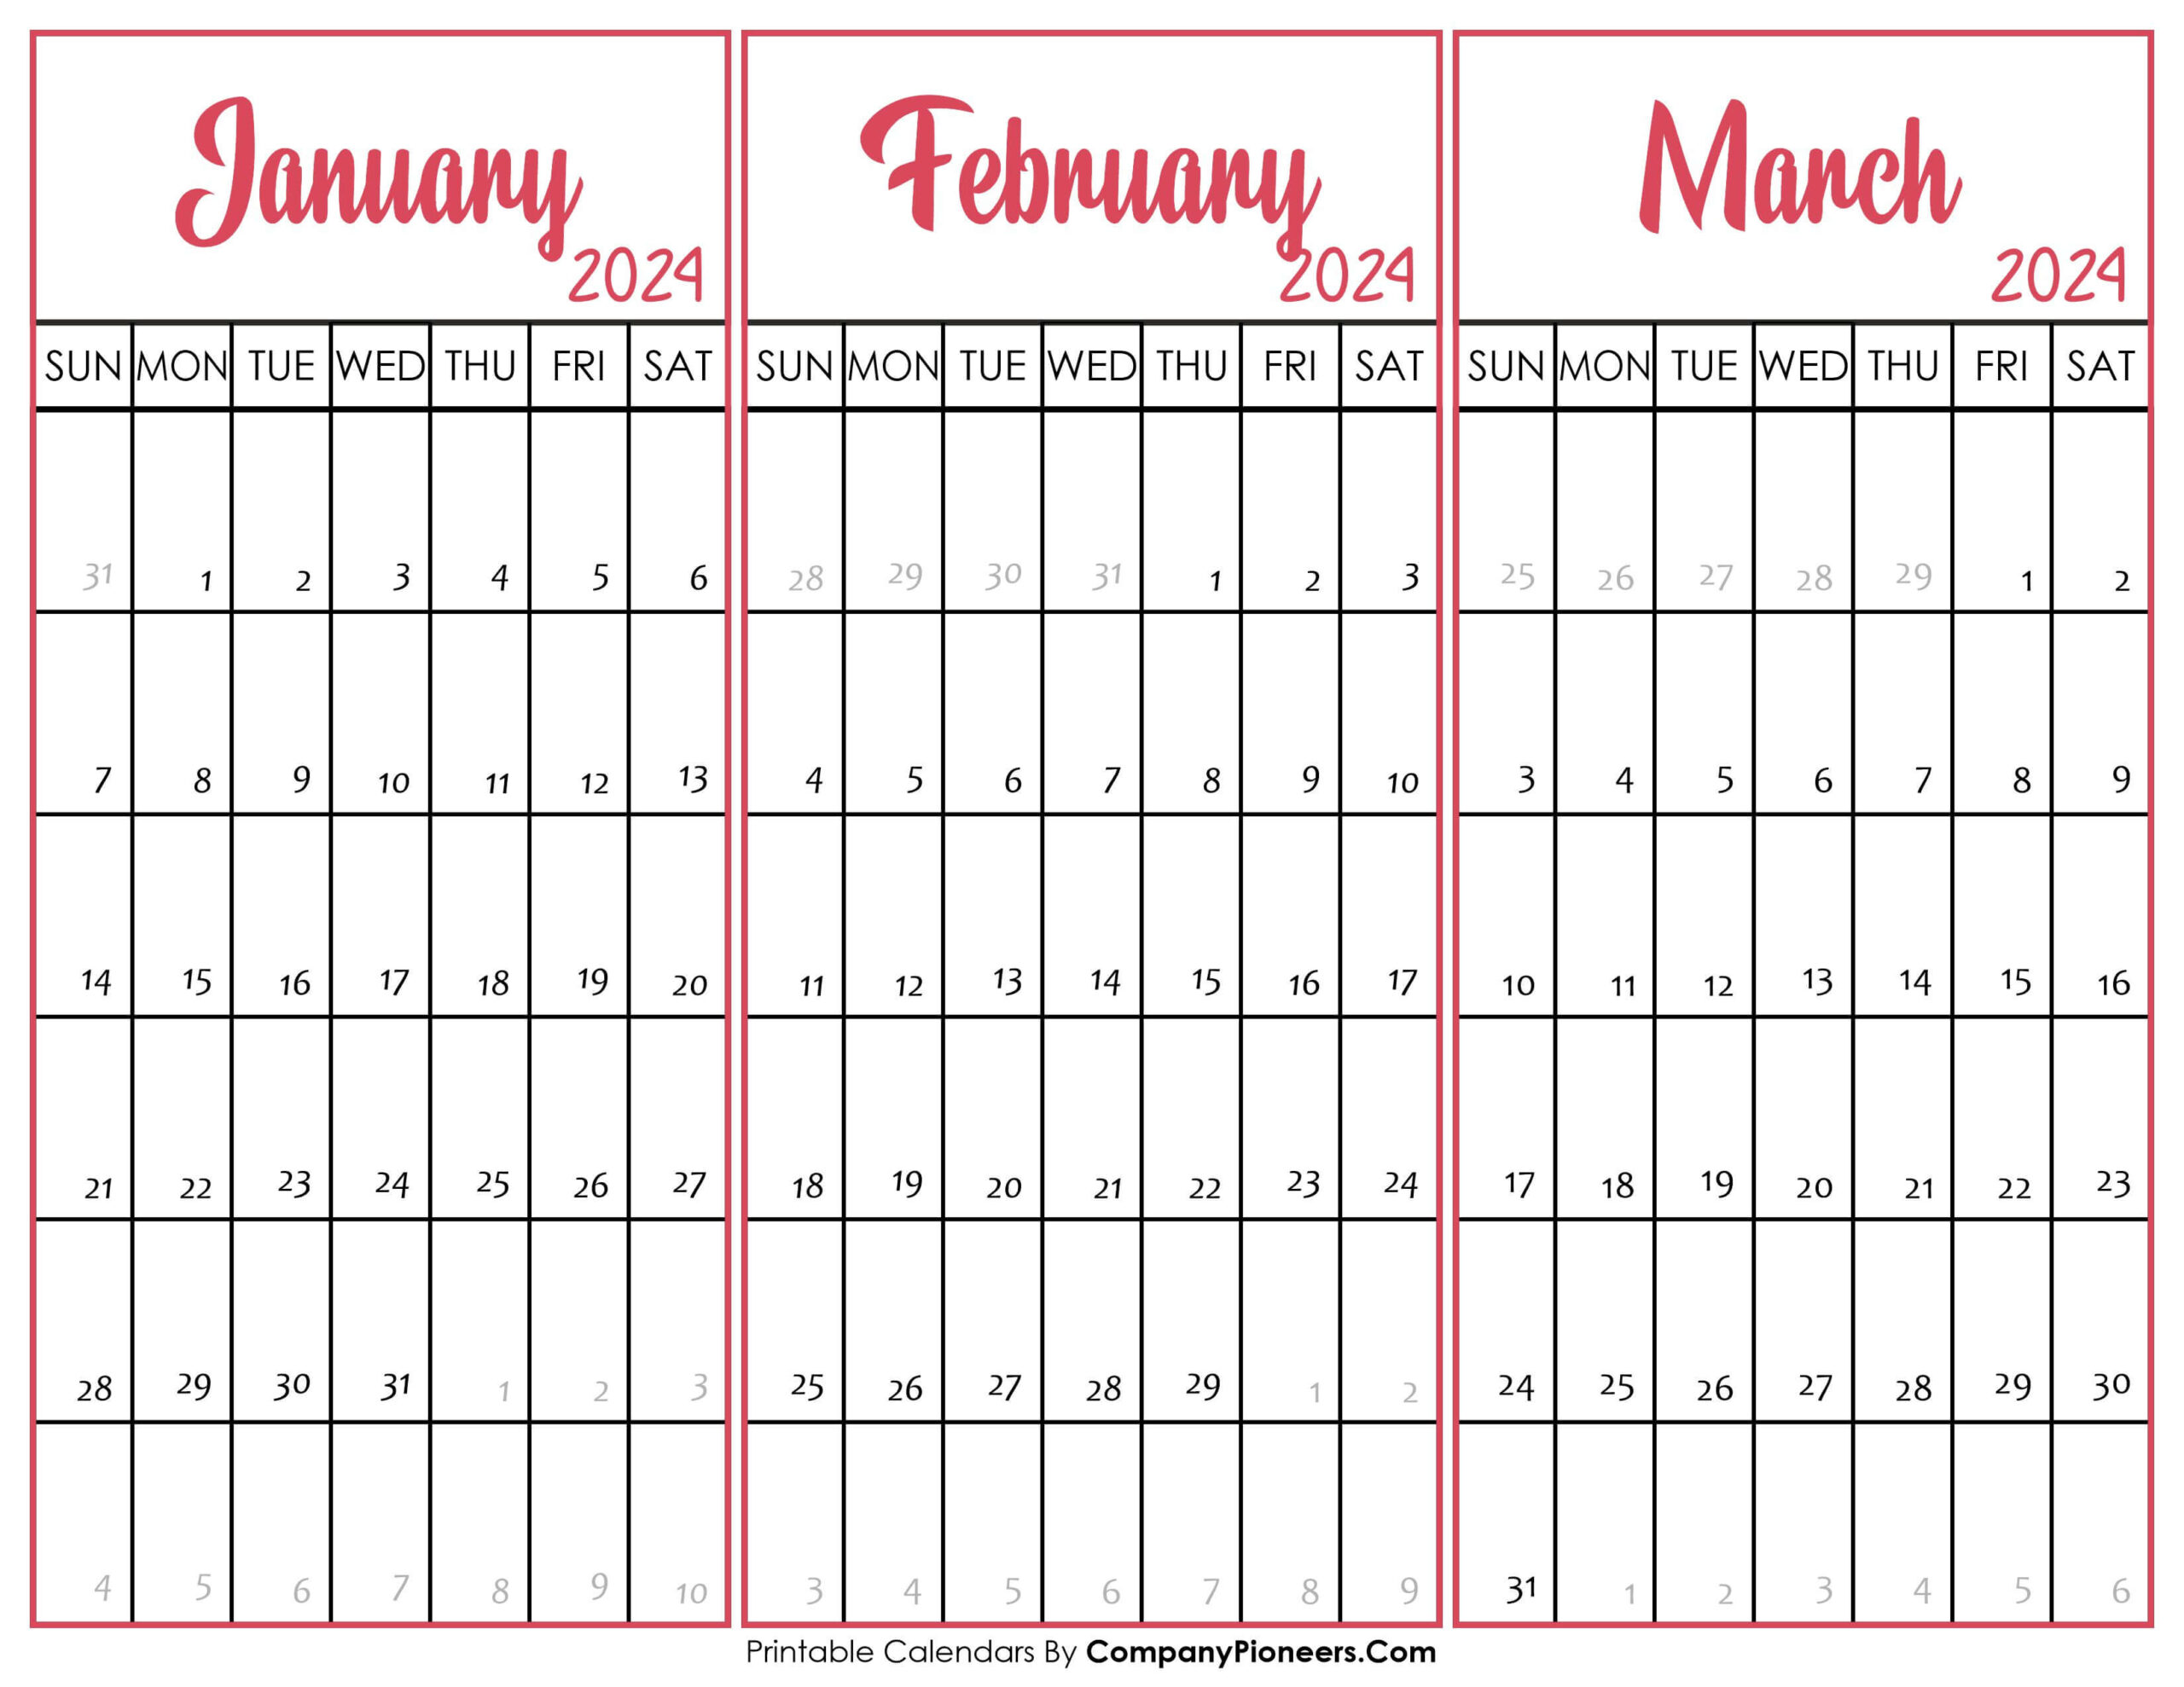 January February March 2024 Calendar Printable - Template | Printable Calendar 2024 January February March